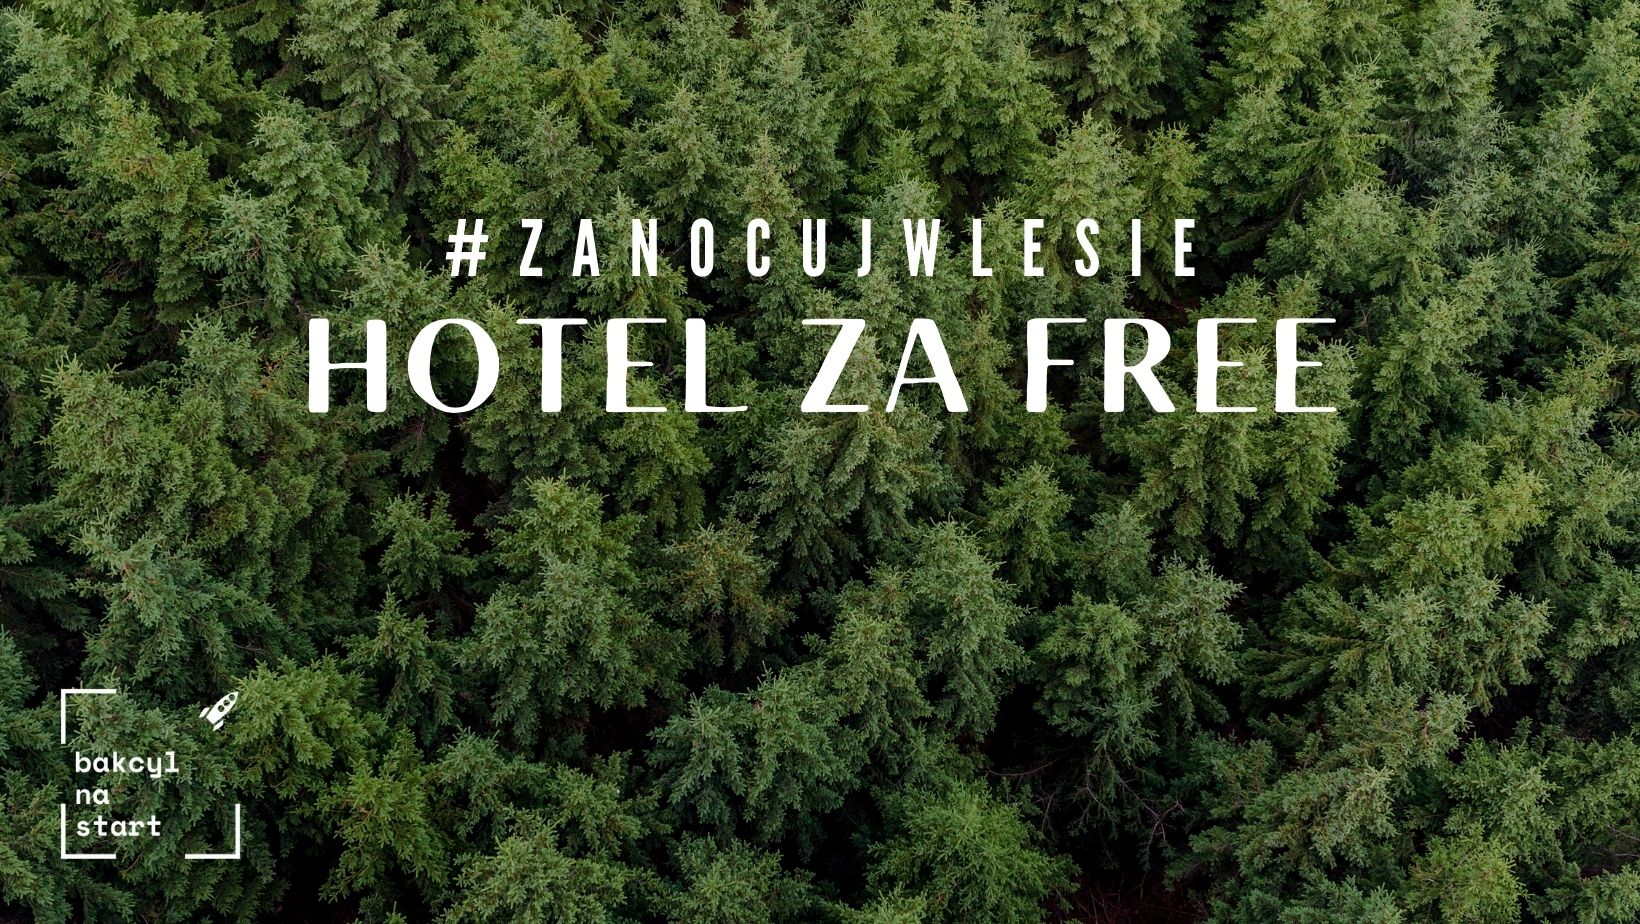 Hotel za free (#zanocujwlesie)